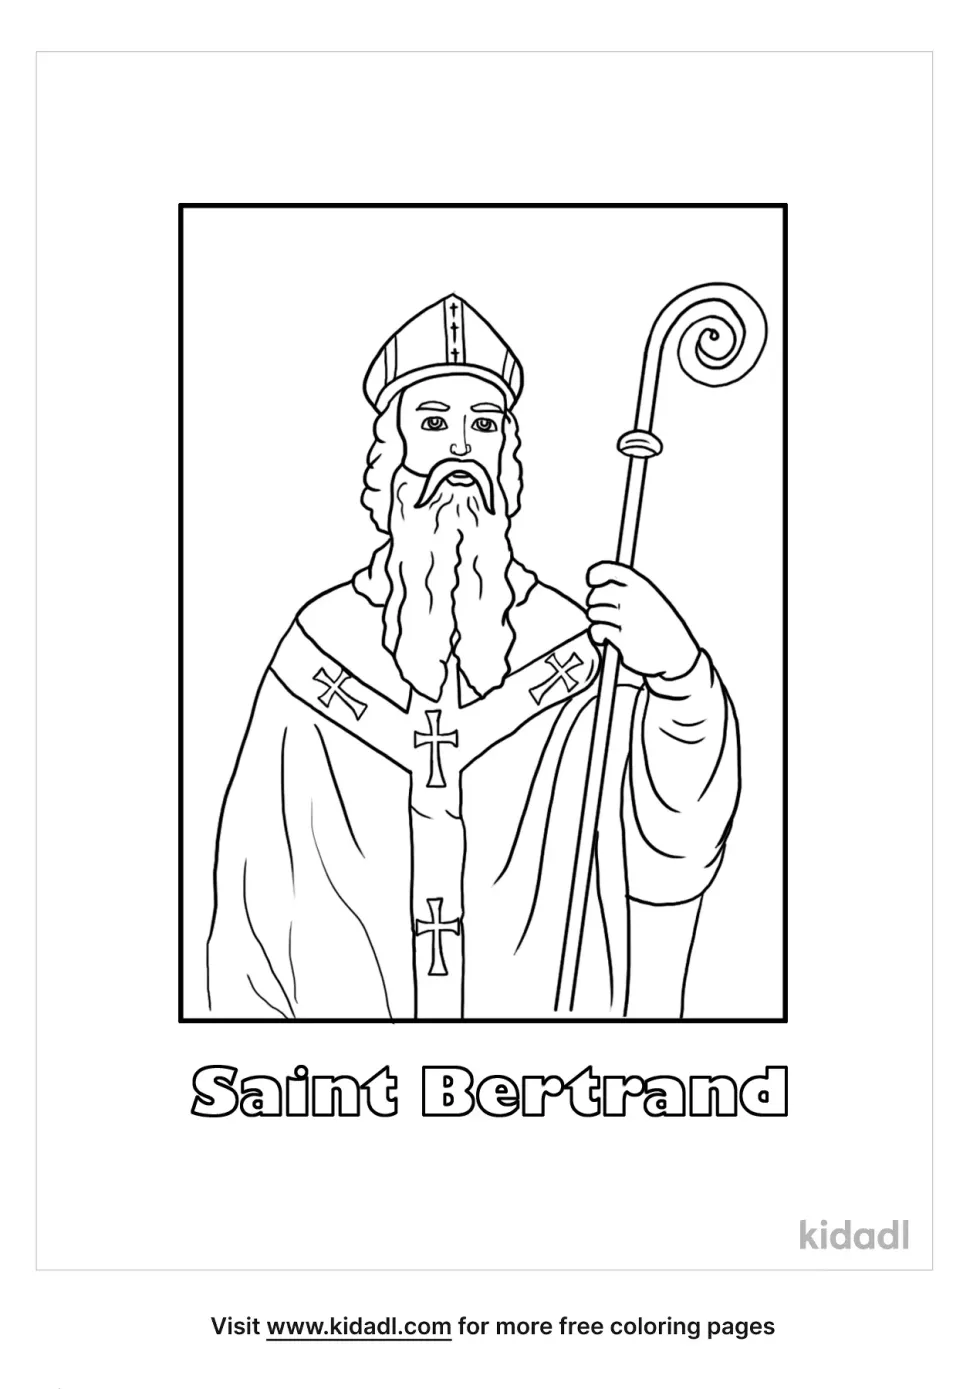 Saint Bertrand Coloring Page